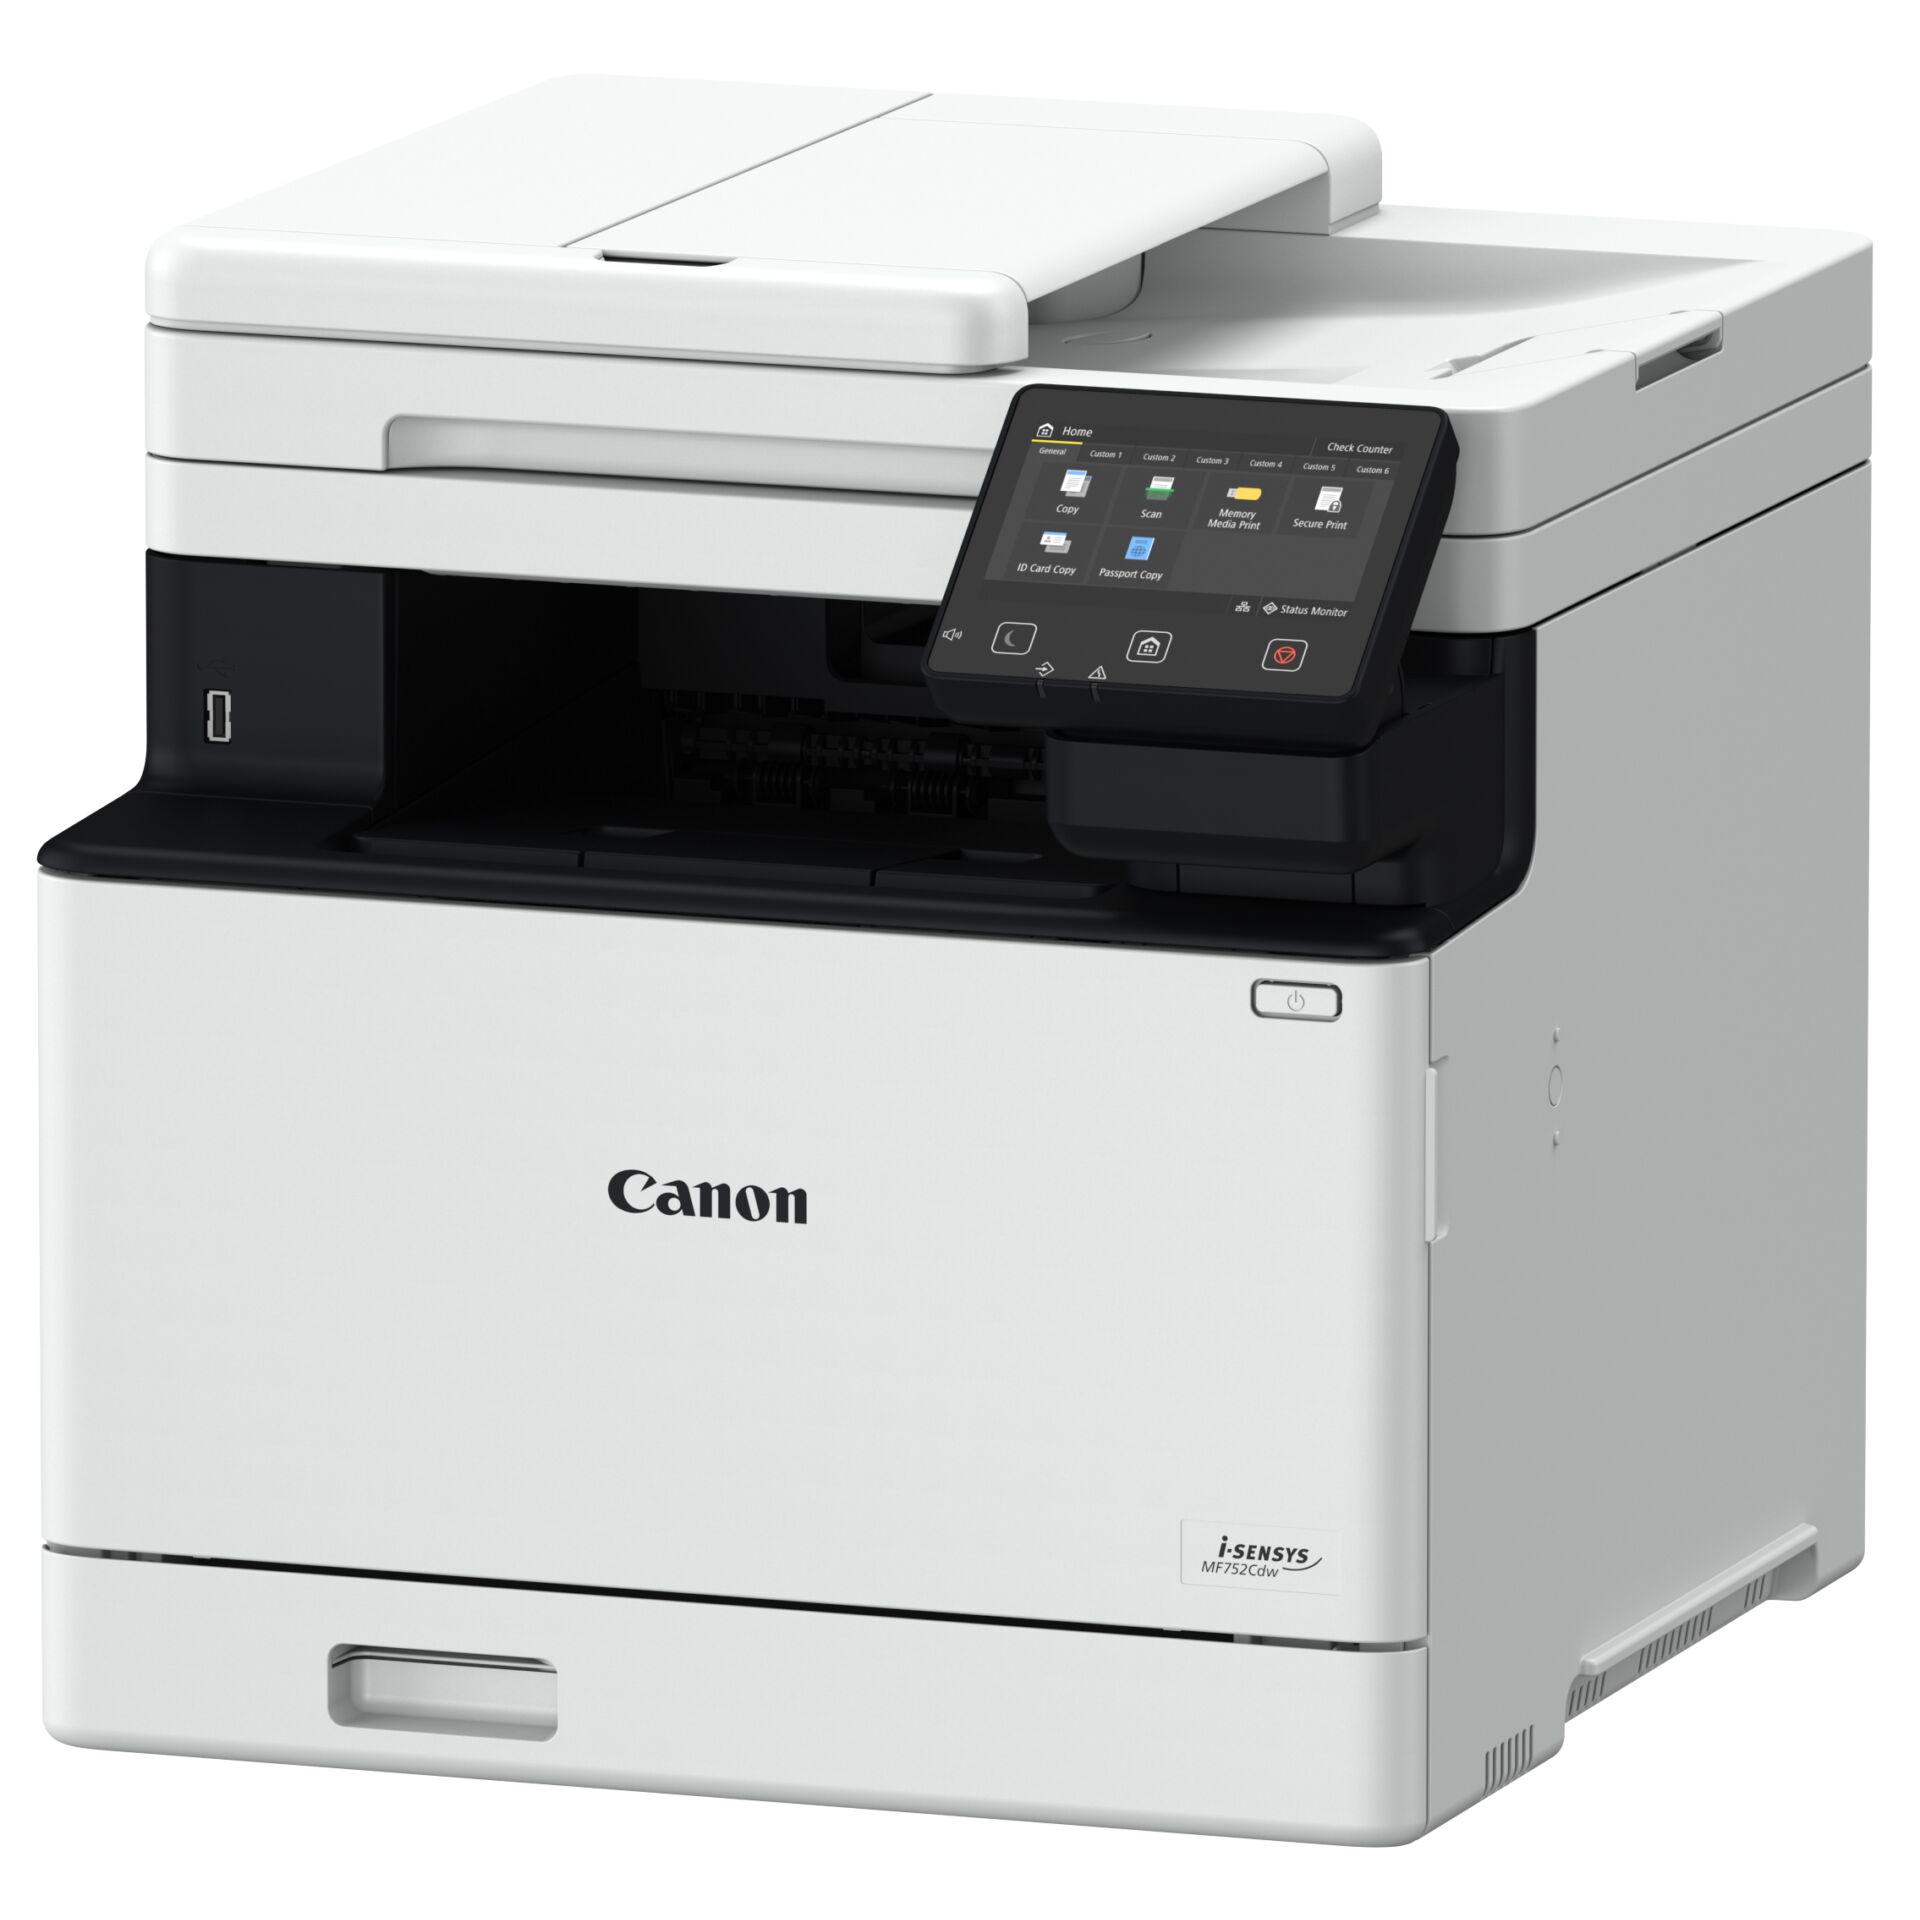 Canon i-SENSYS MF752Cdw, WLAN, Laser, mehrfarbig- Multifunktionsgerät, Drucker/Scanner/Kopierer